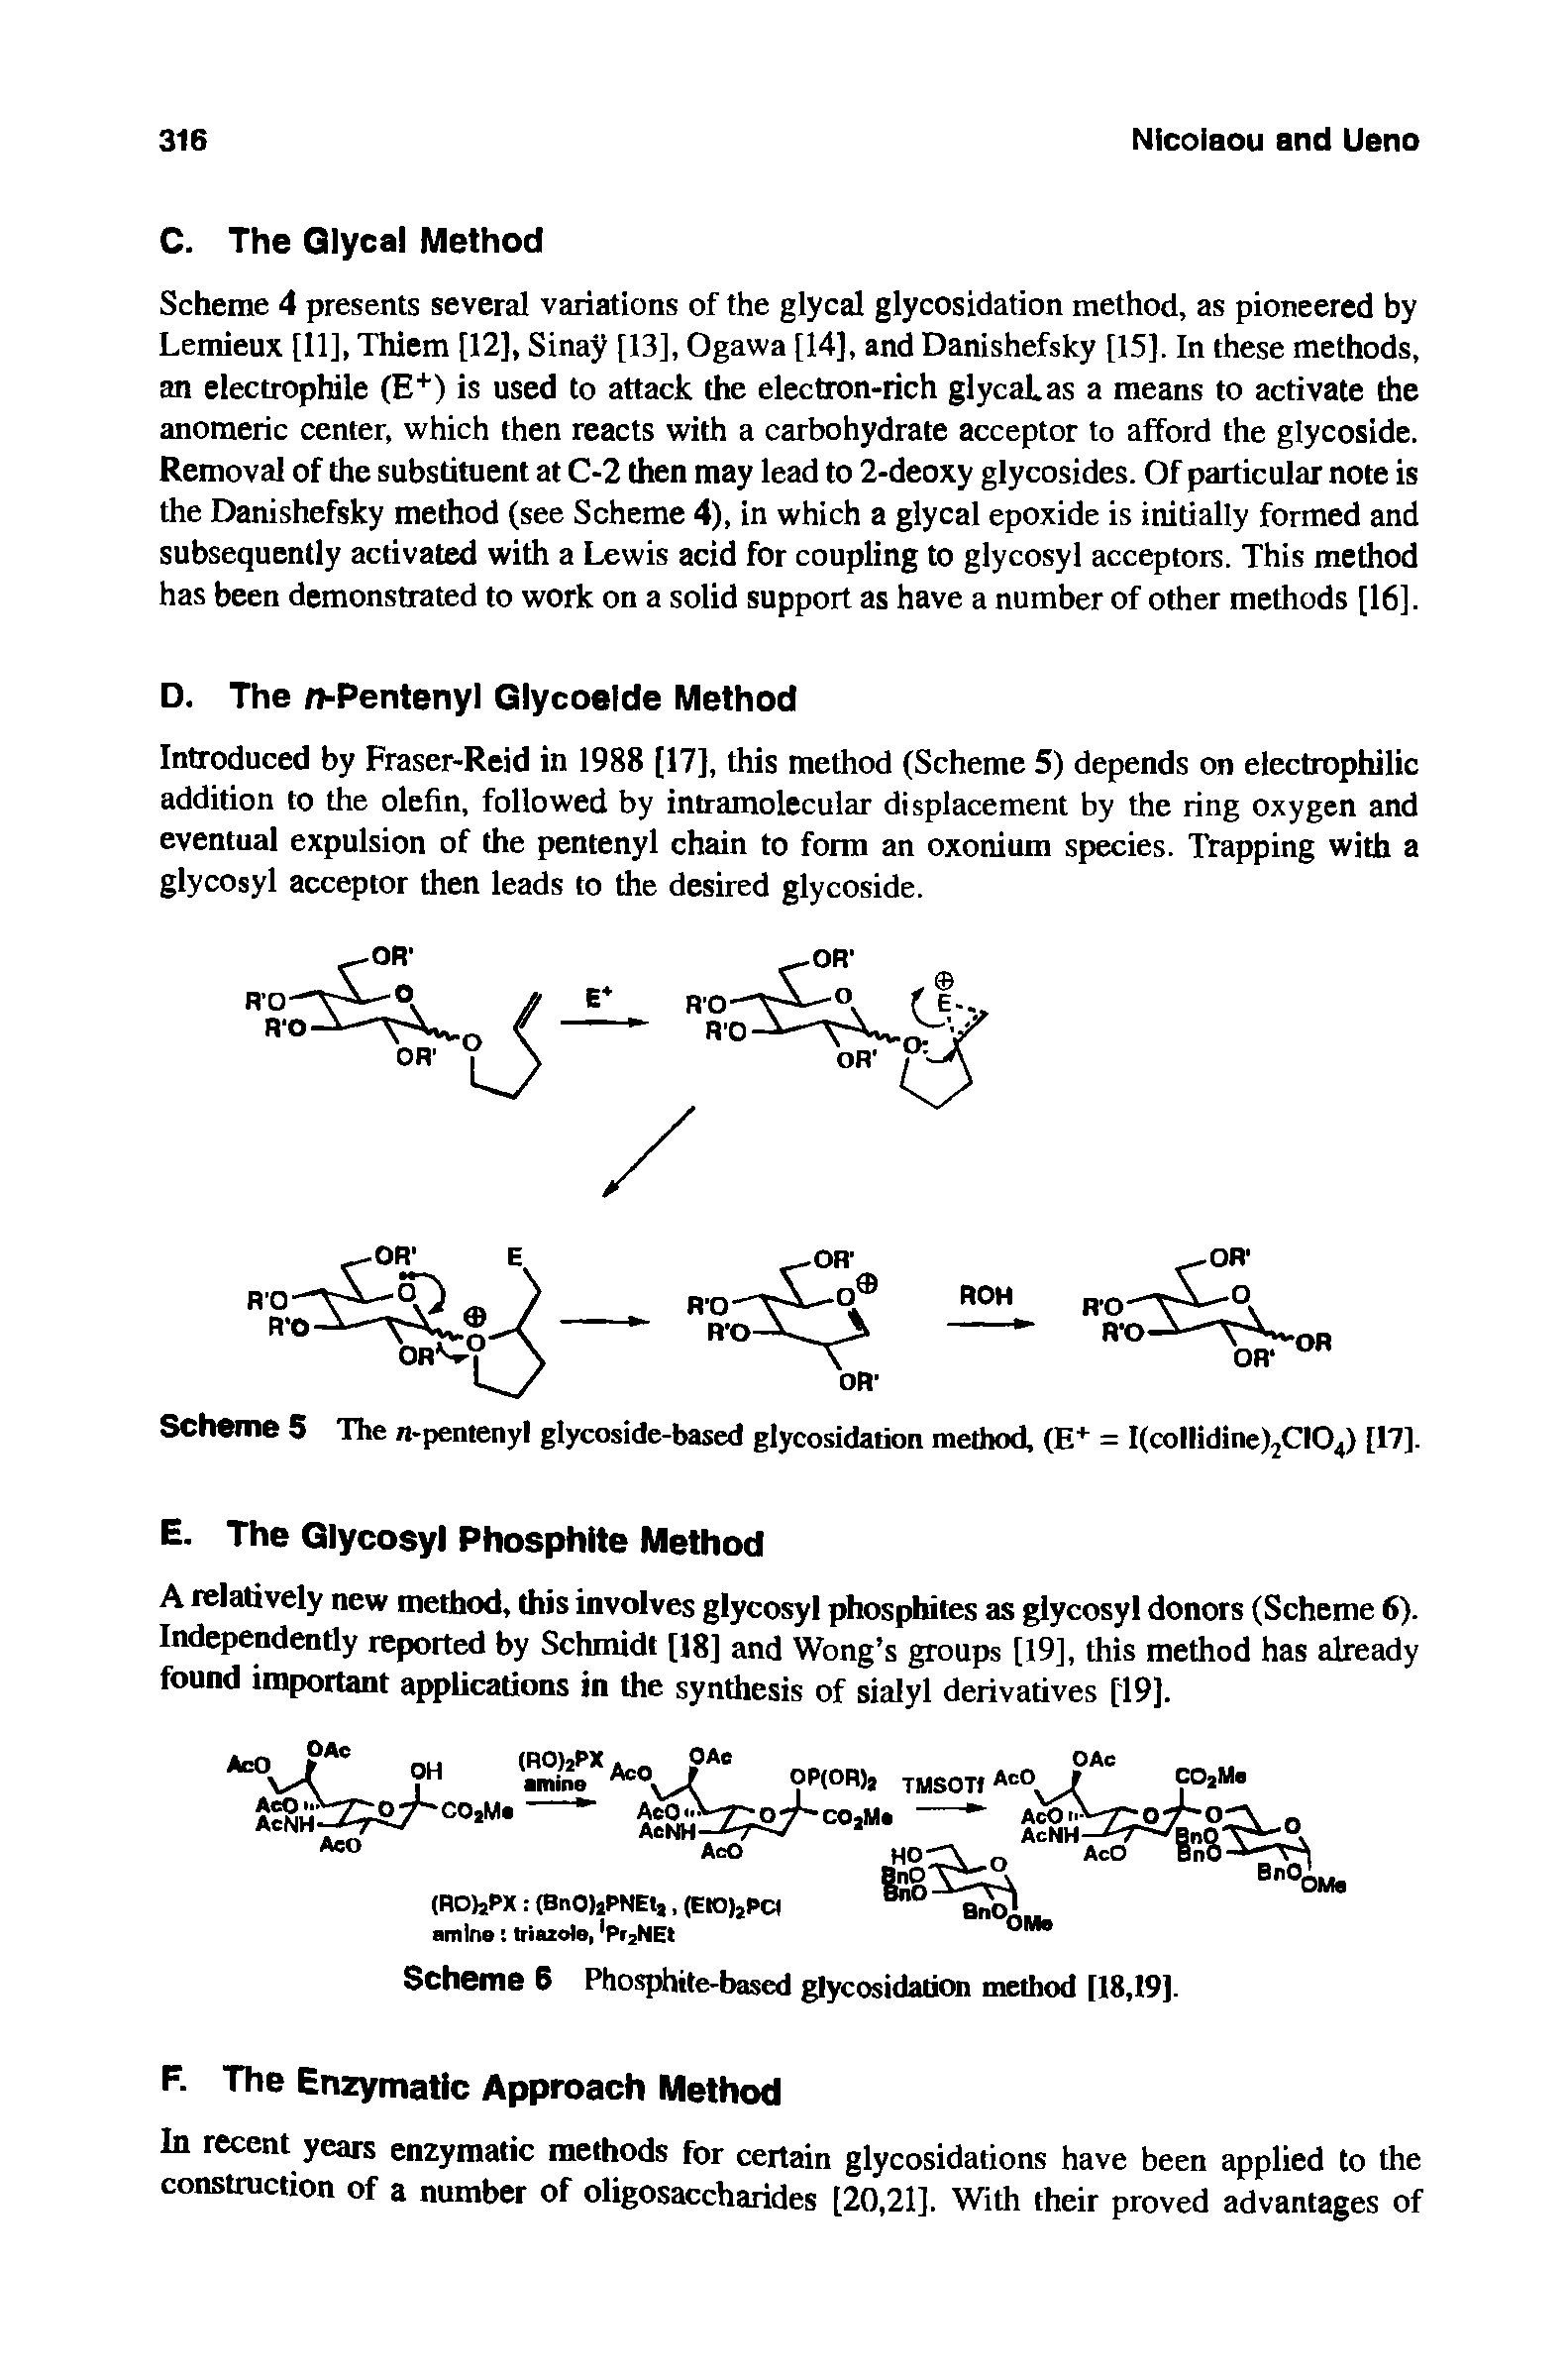 Scheme 5 The n-pentenyl glycoside-based glycosidation method, (E+ = l(collidine)2CI04) [17].